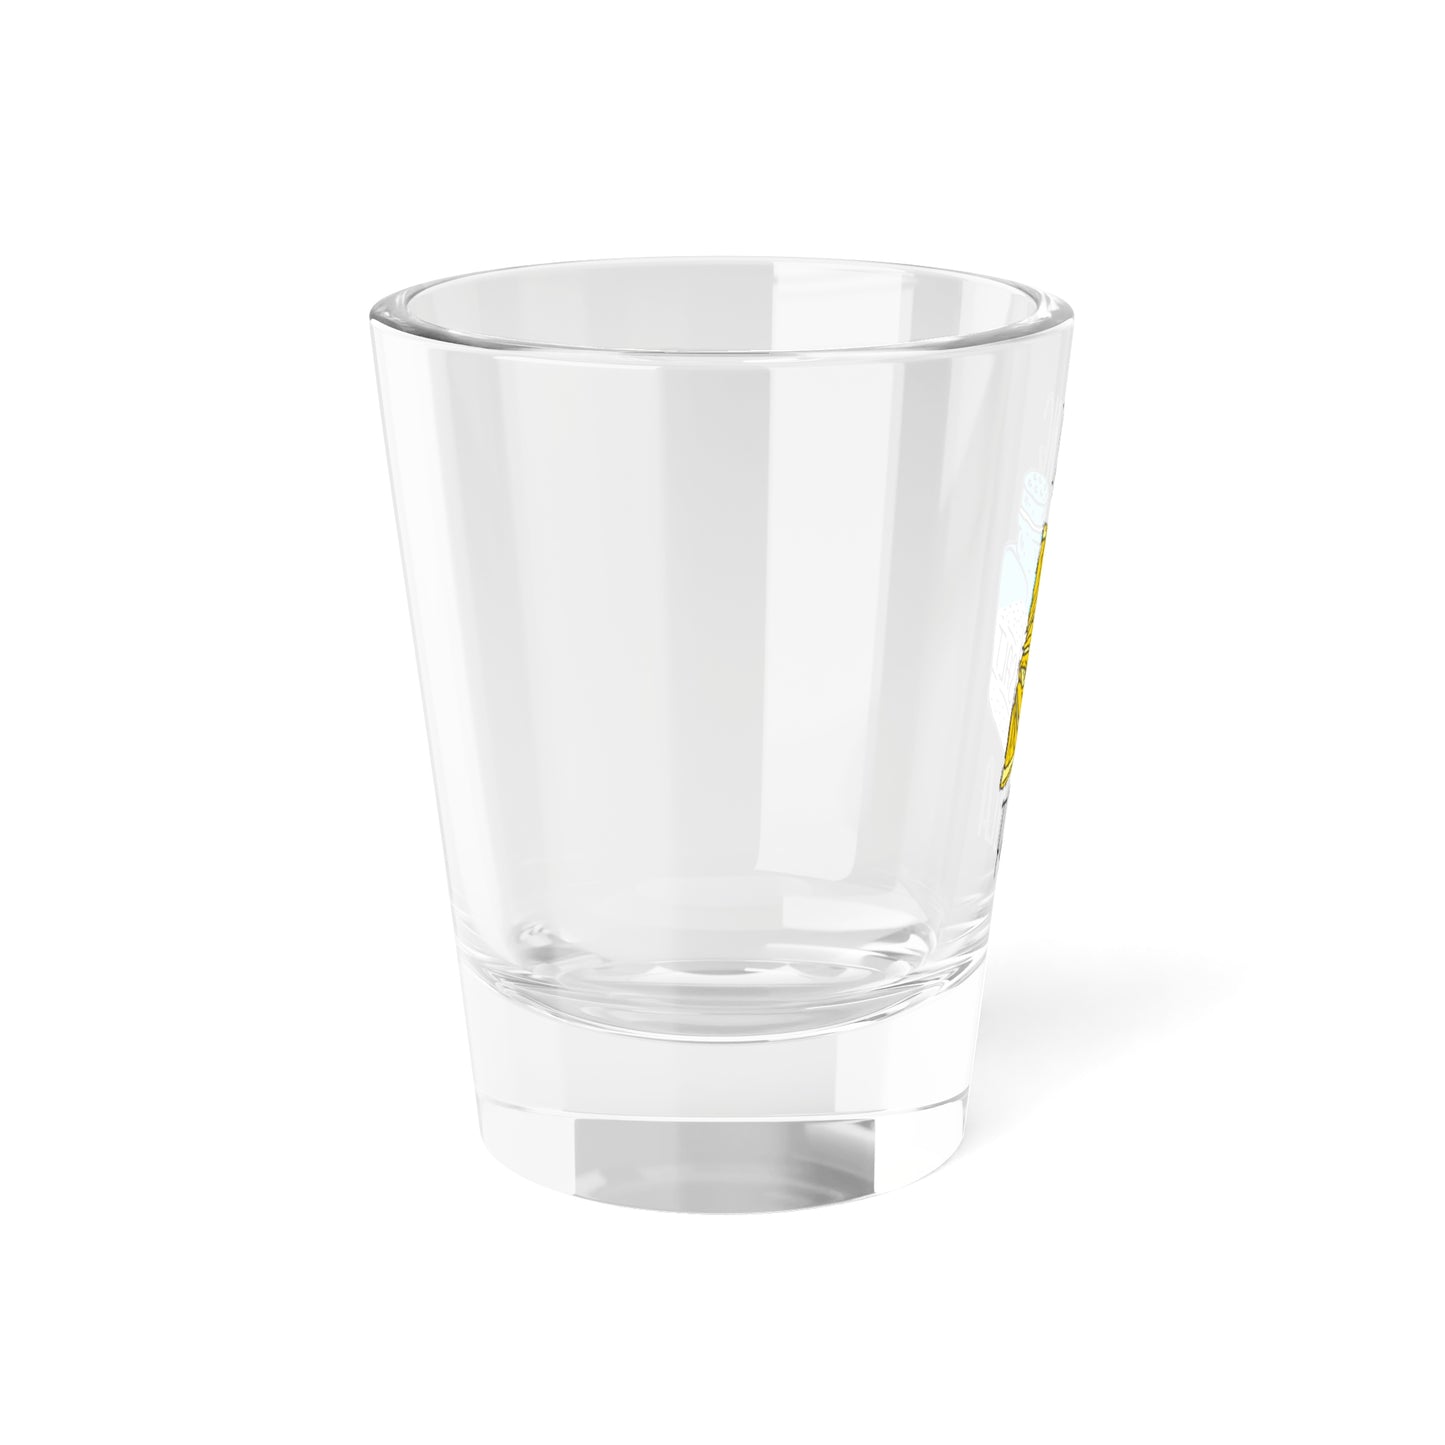 Bring Tequila Shot Glass 1.5oz